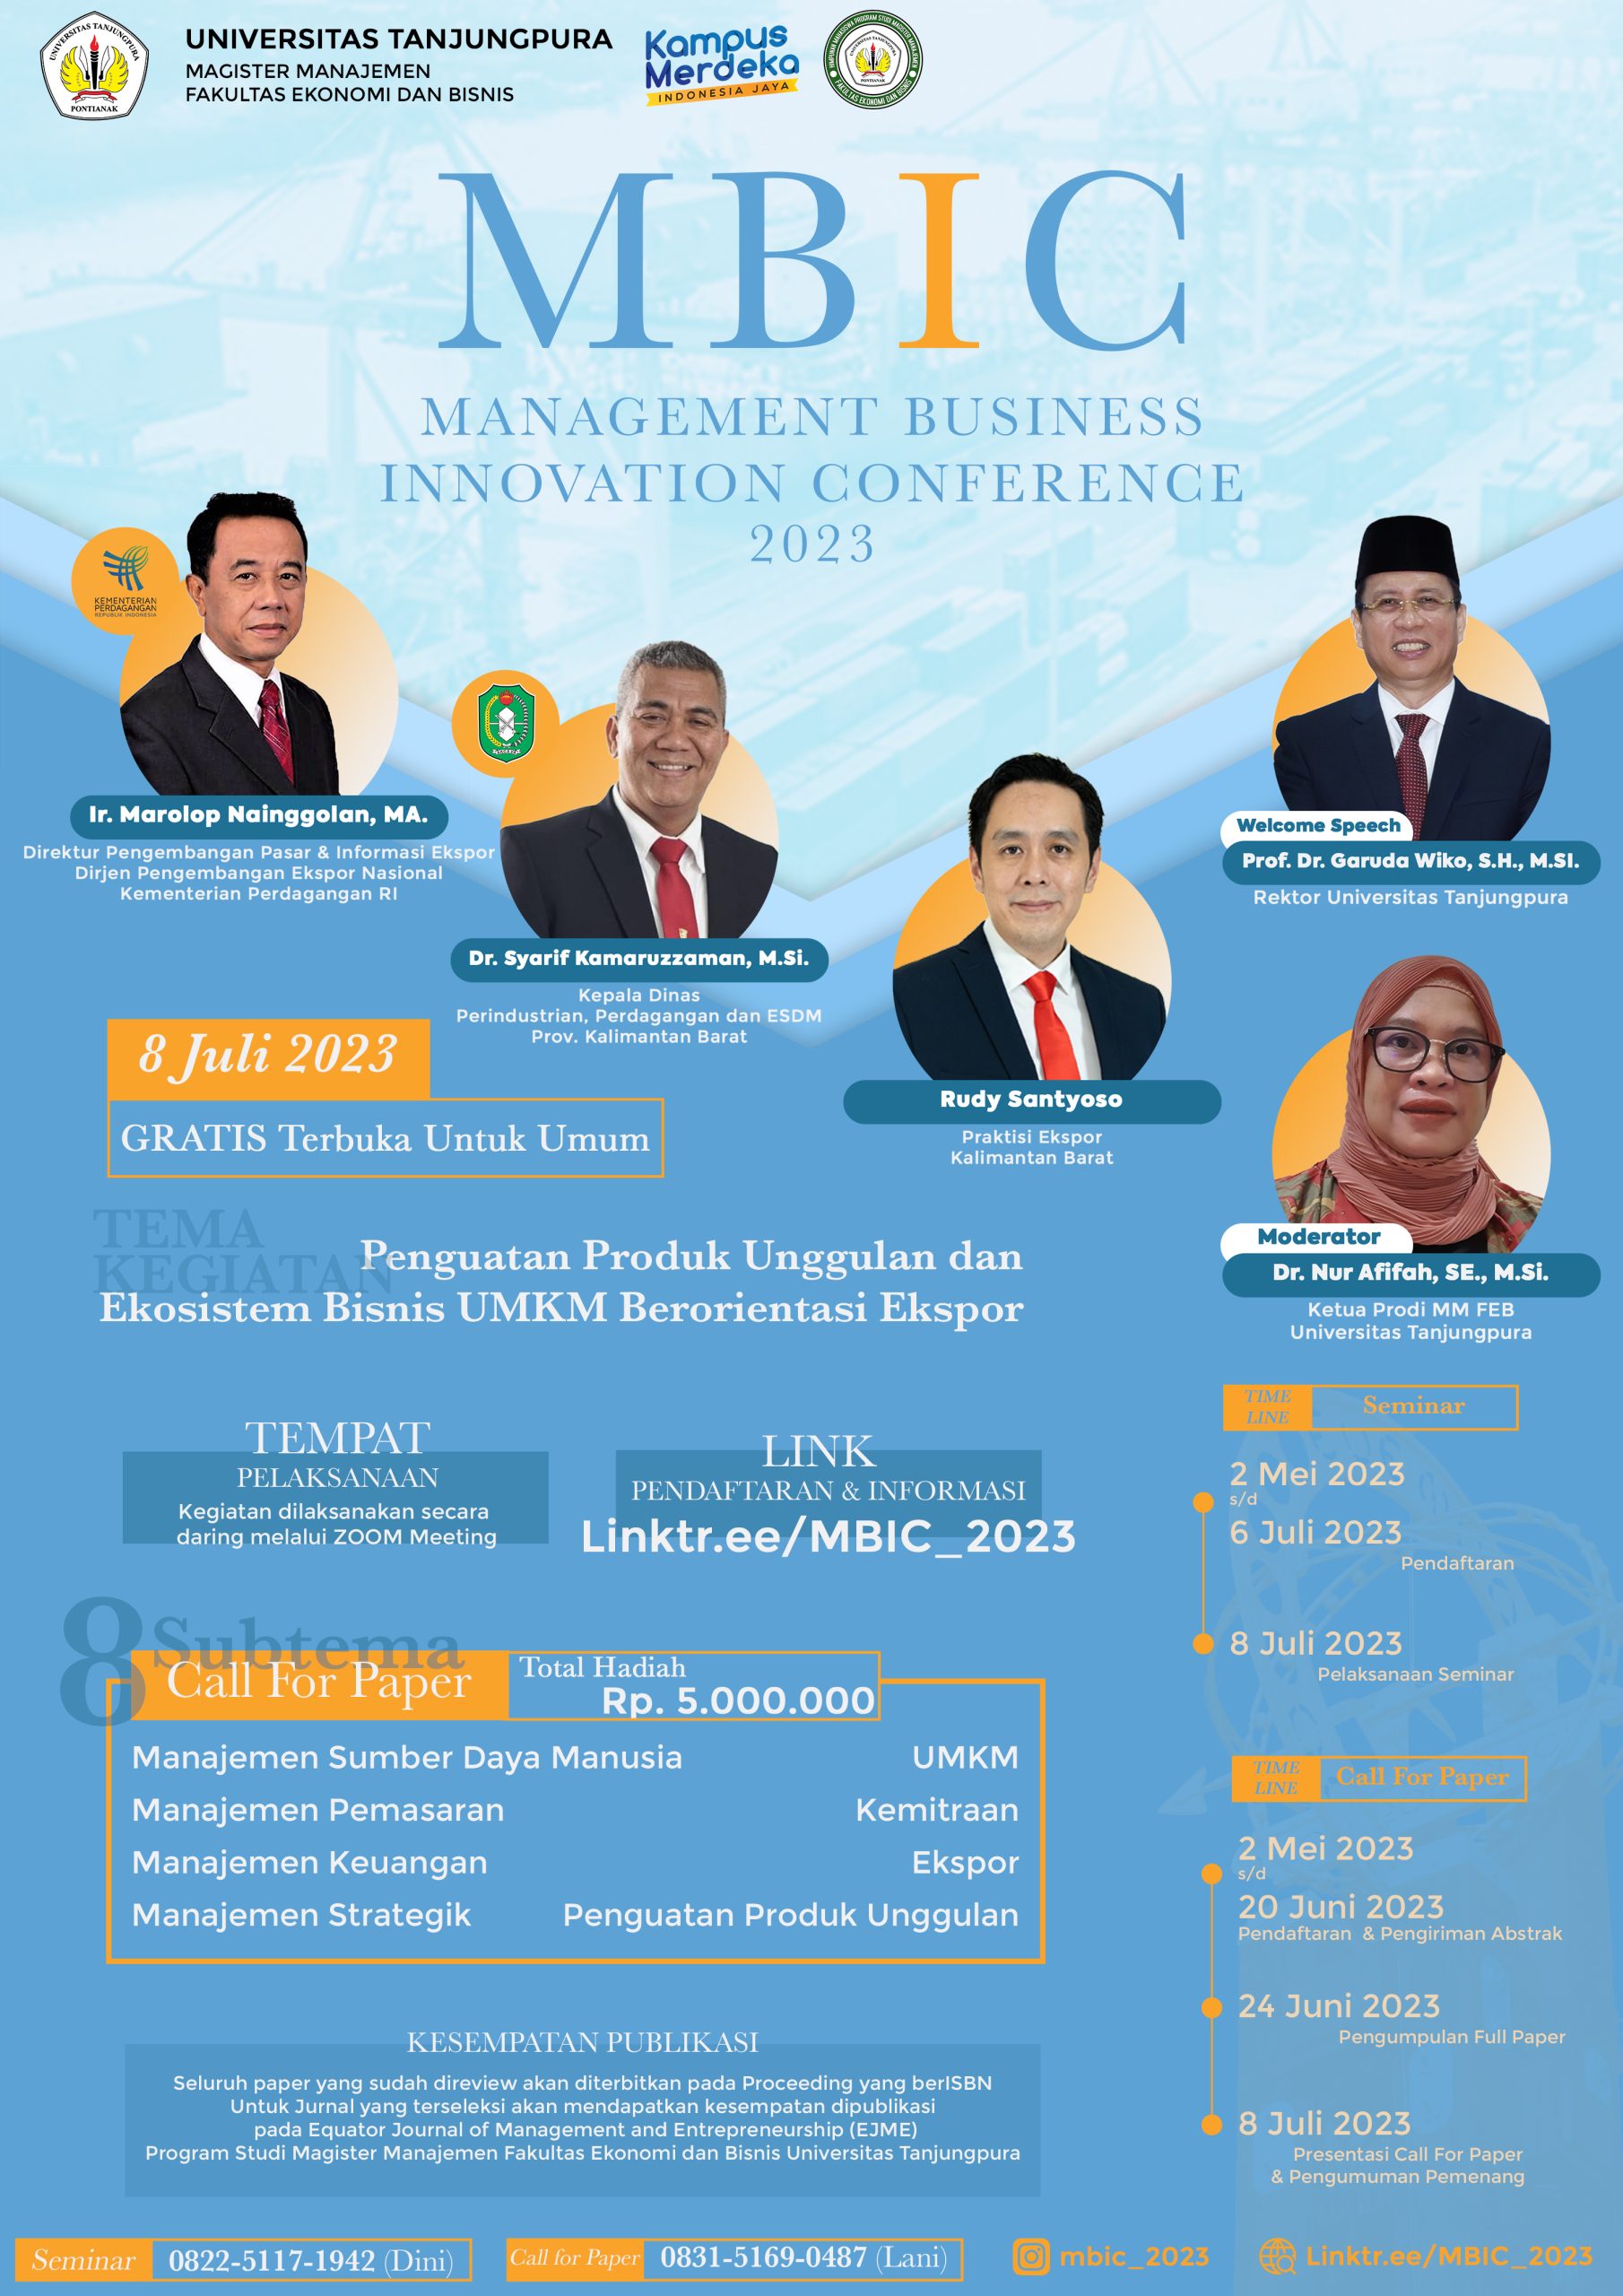 Management Business Innovation Conference 2023